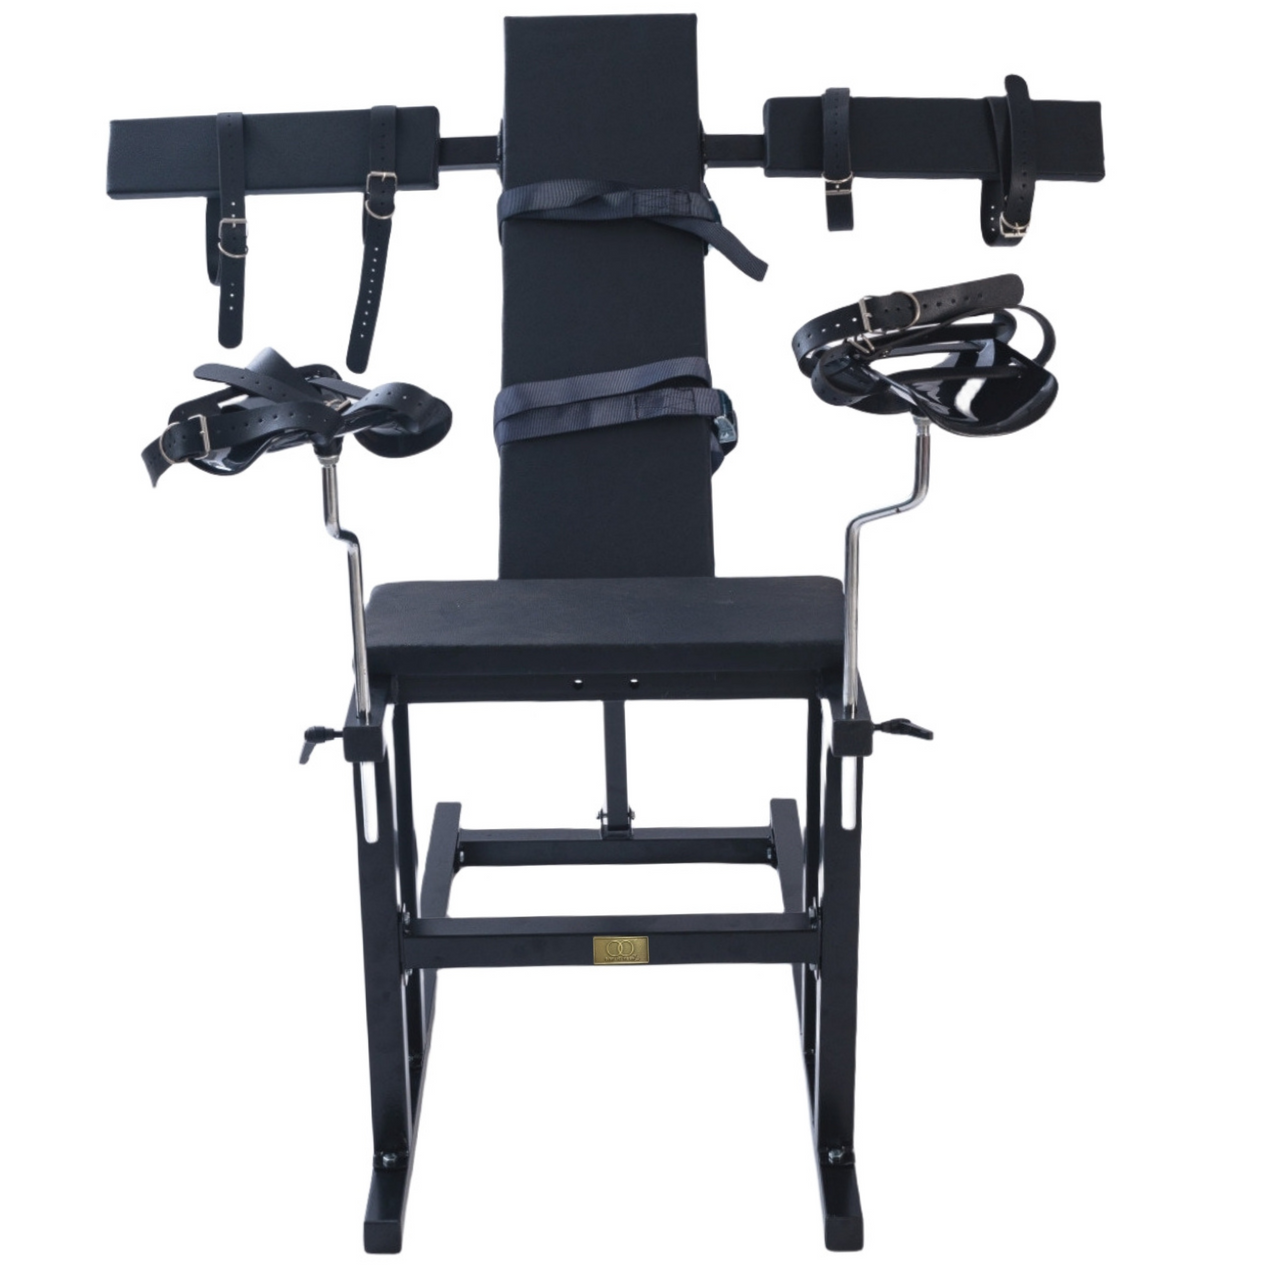 Roomsacred Gyno Chair Spanking Bench Adjustable Arm Splints & Wide Leg Stirrups BDSM Restraint Adult Bedroom Play Furniture